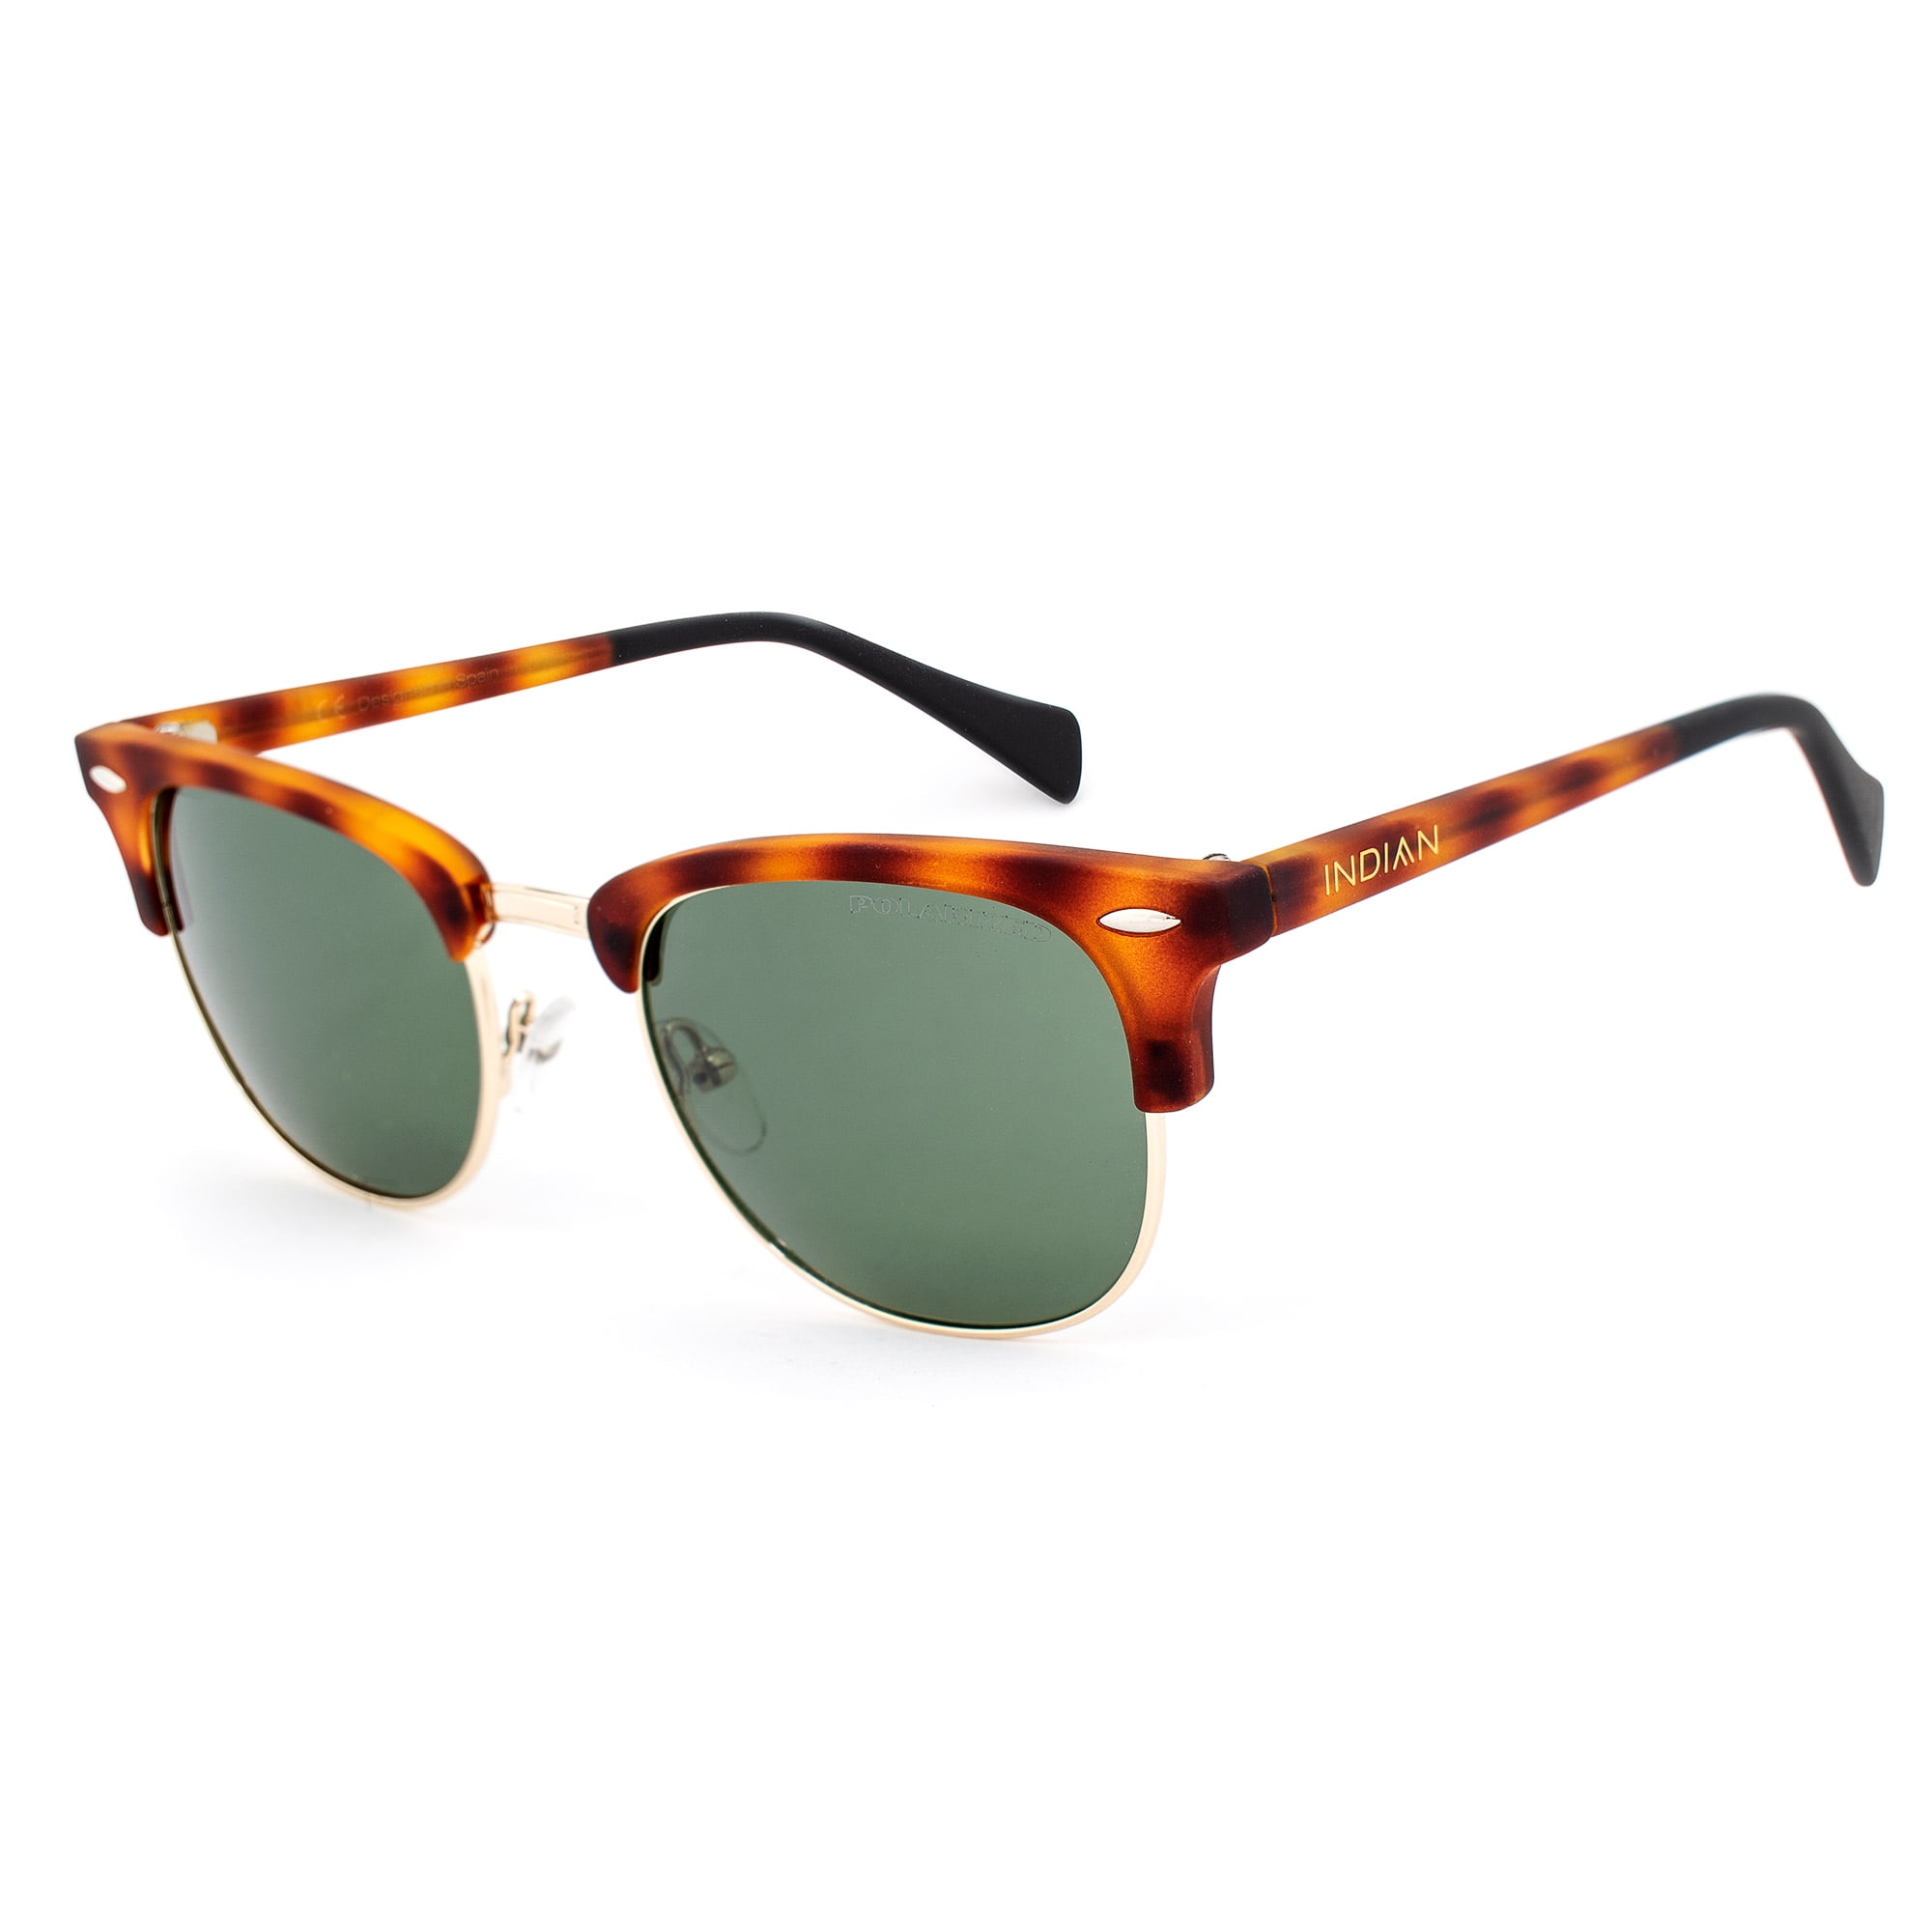 Indian Sunglasses Polarized Fashion Sun Glasses Indian Tortoise Brown Green G 15 Unisex